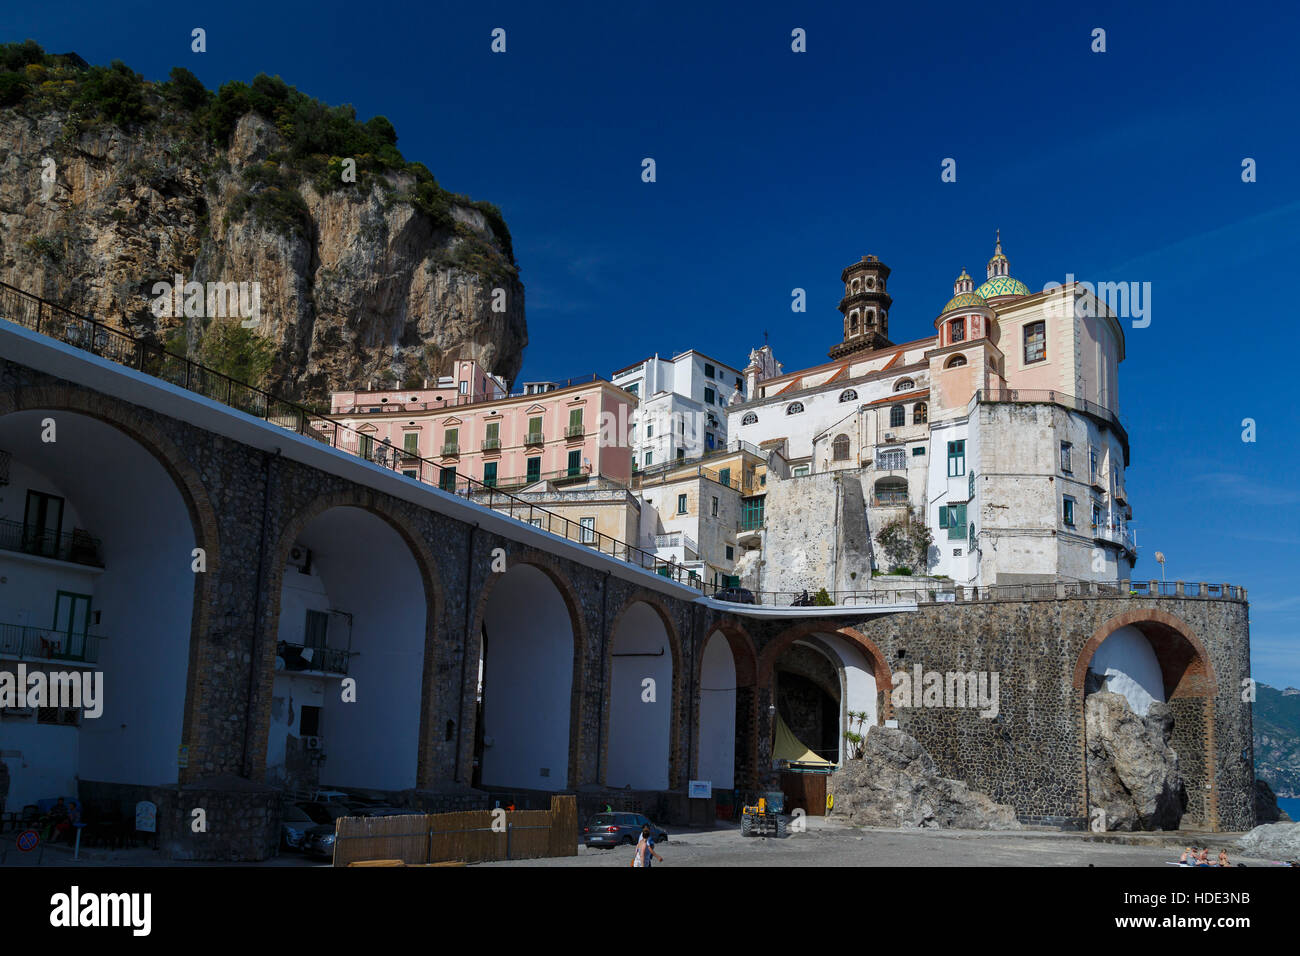 Die Collegiata Santa Maria Maddalena-Kirche in Atrani auf der Amalfi Küste, Kampanien, Salerno in Süditalien. Stockfoto